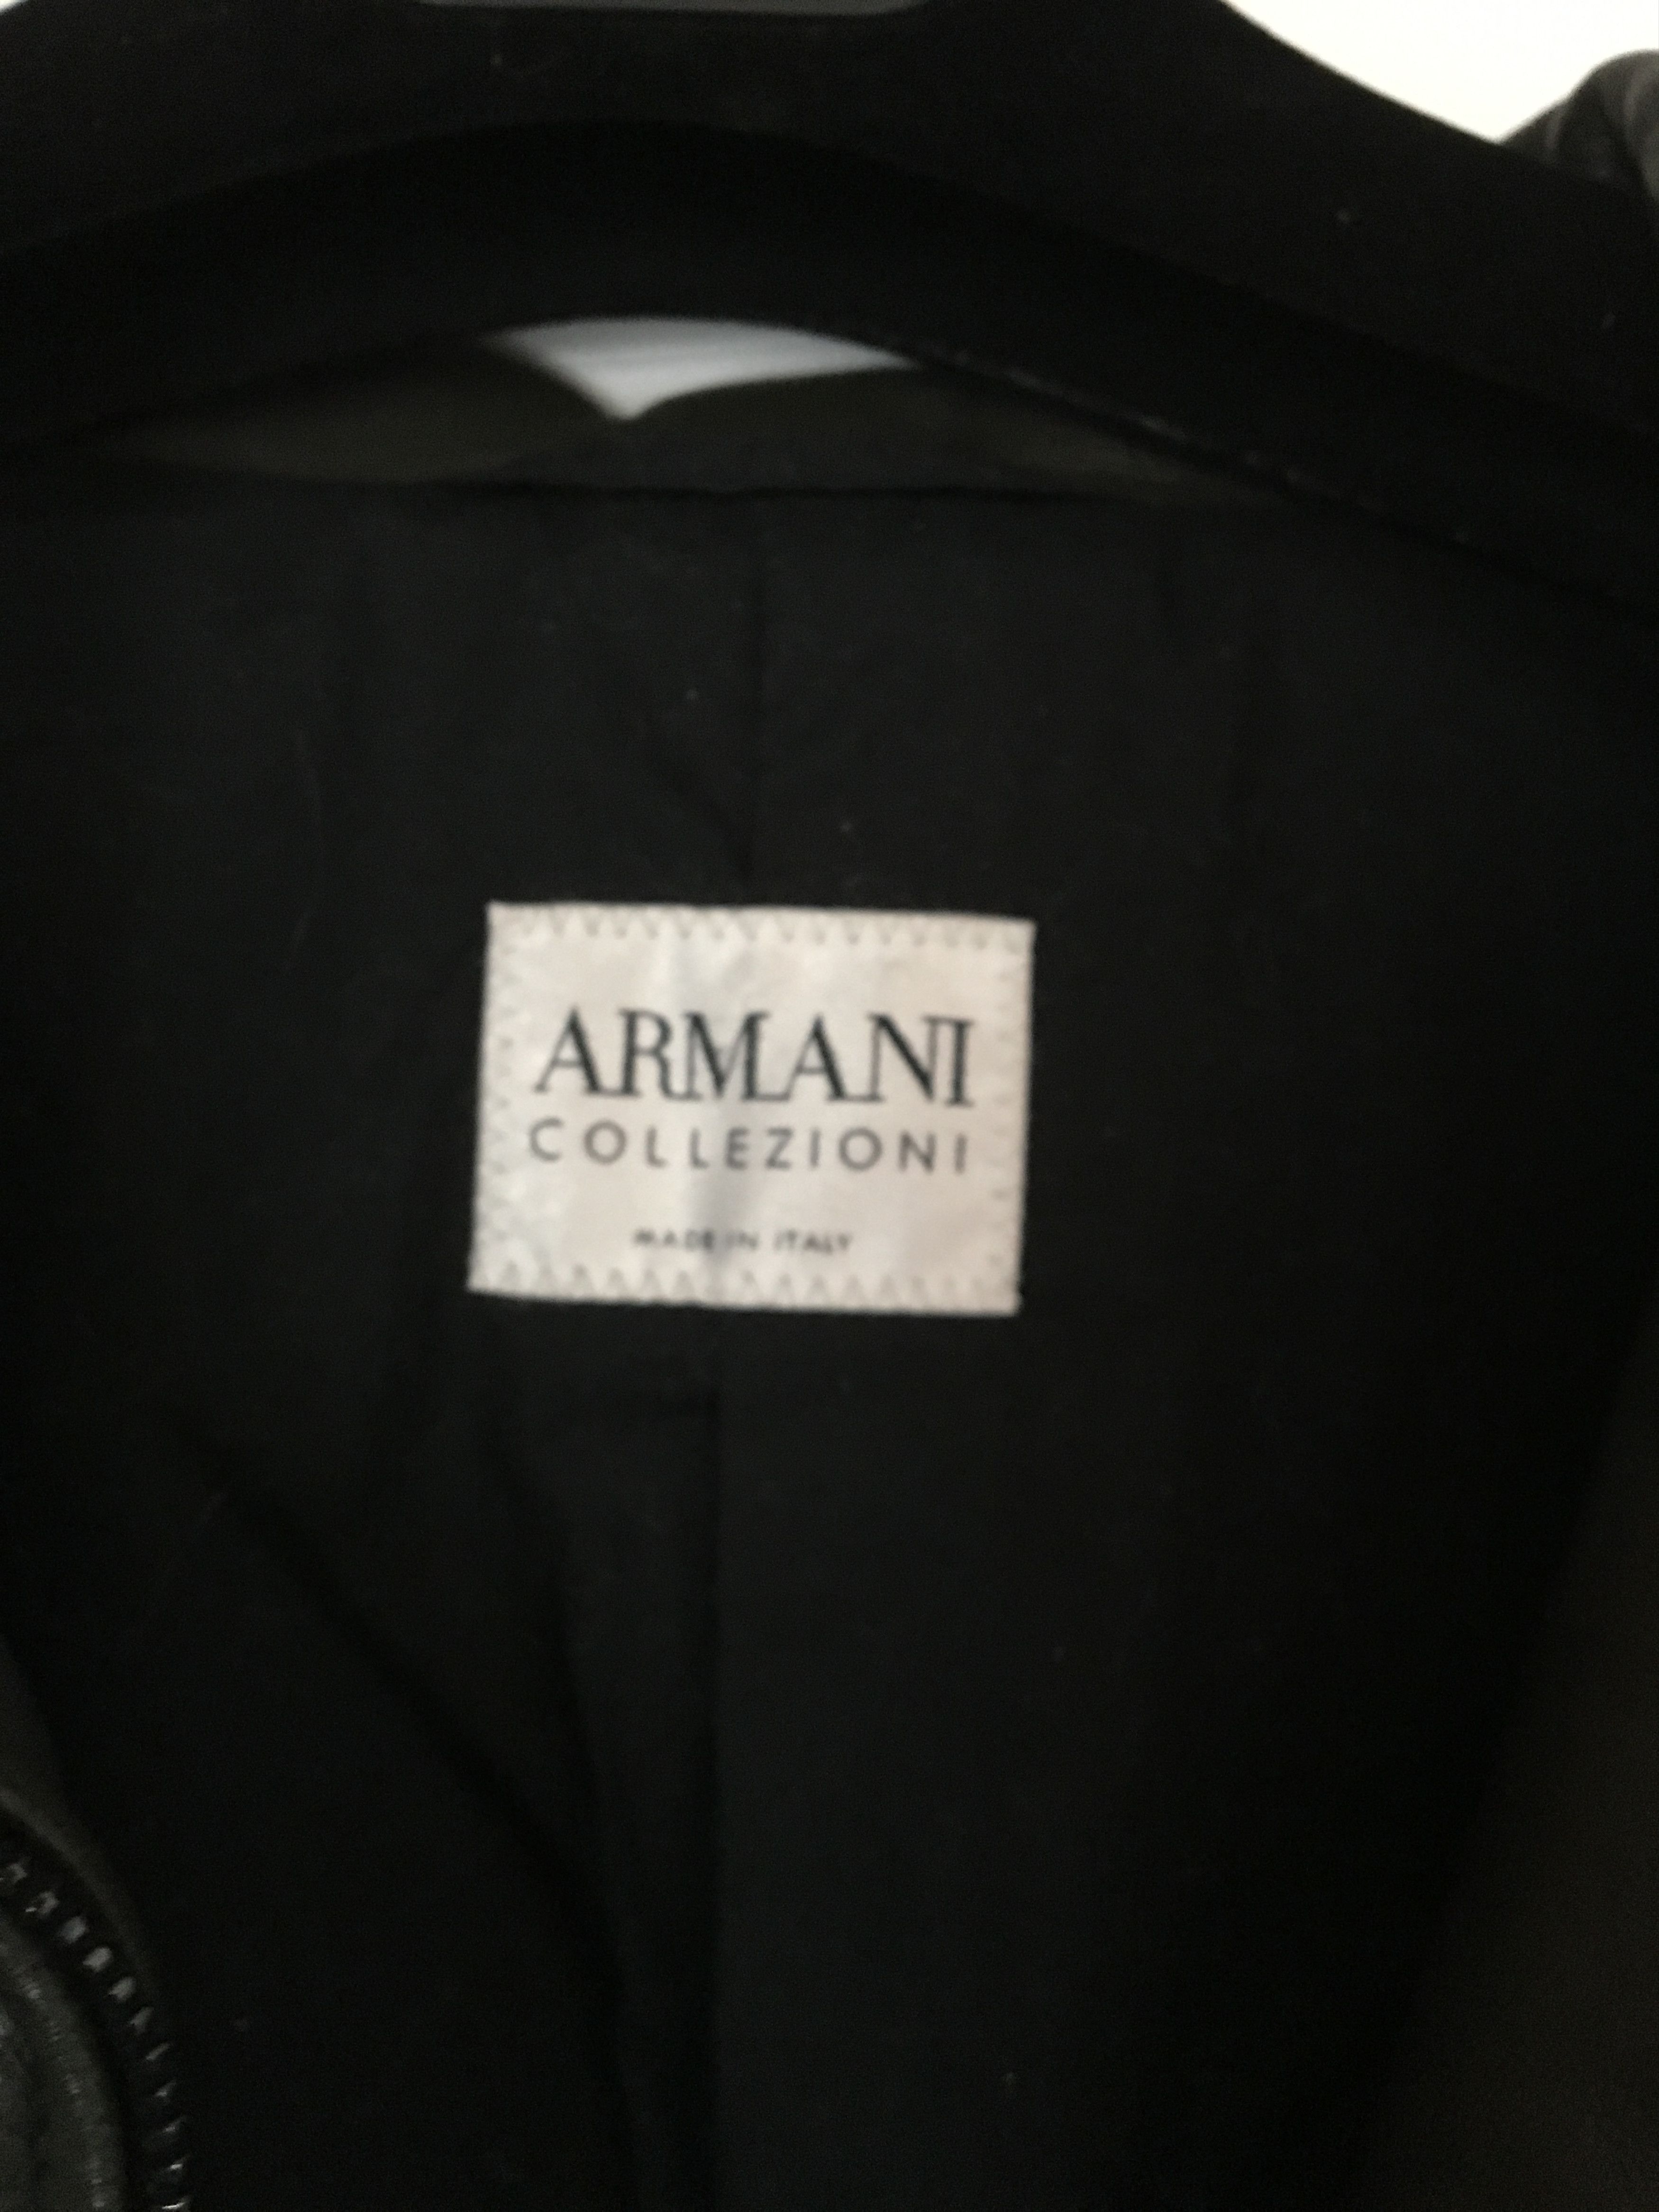 Armani Armani colezioni olive green leather jacket | Grailed